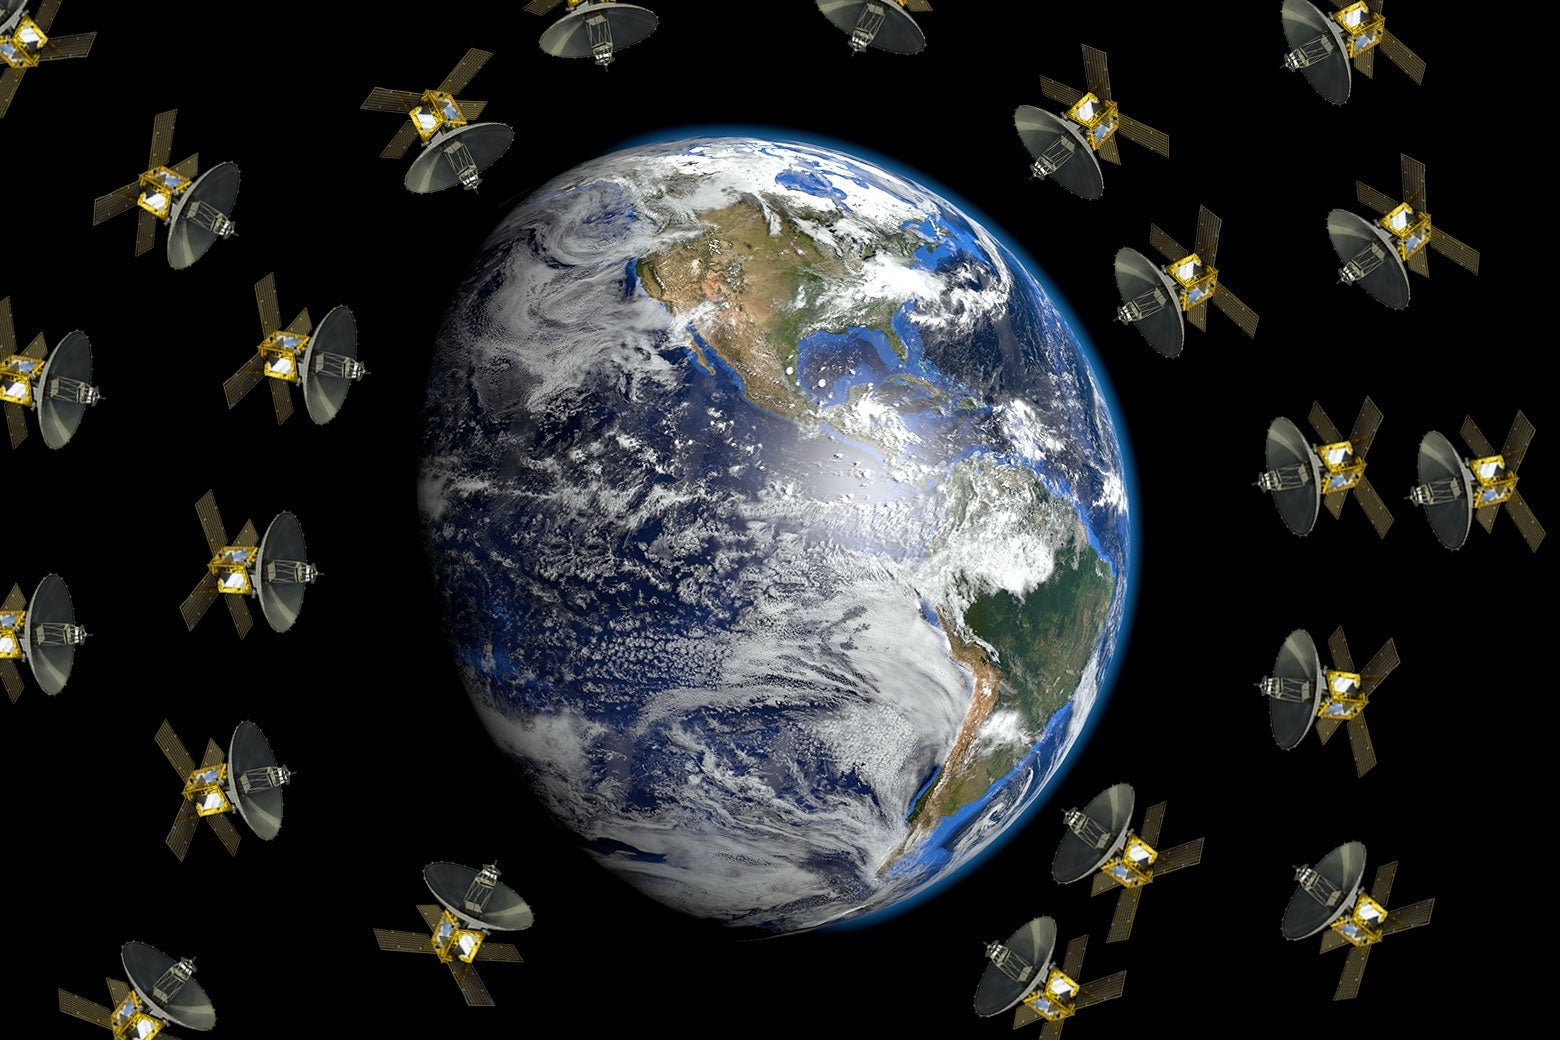 Satellites swarming around the Earth like flies.